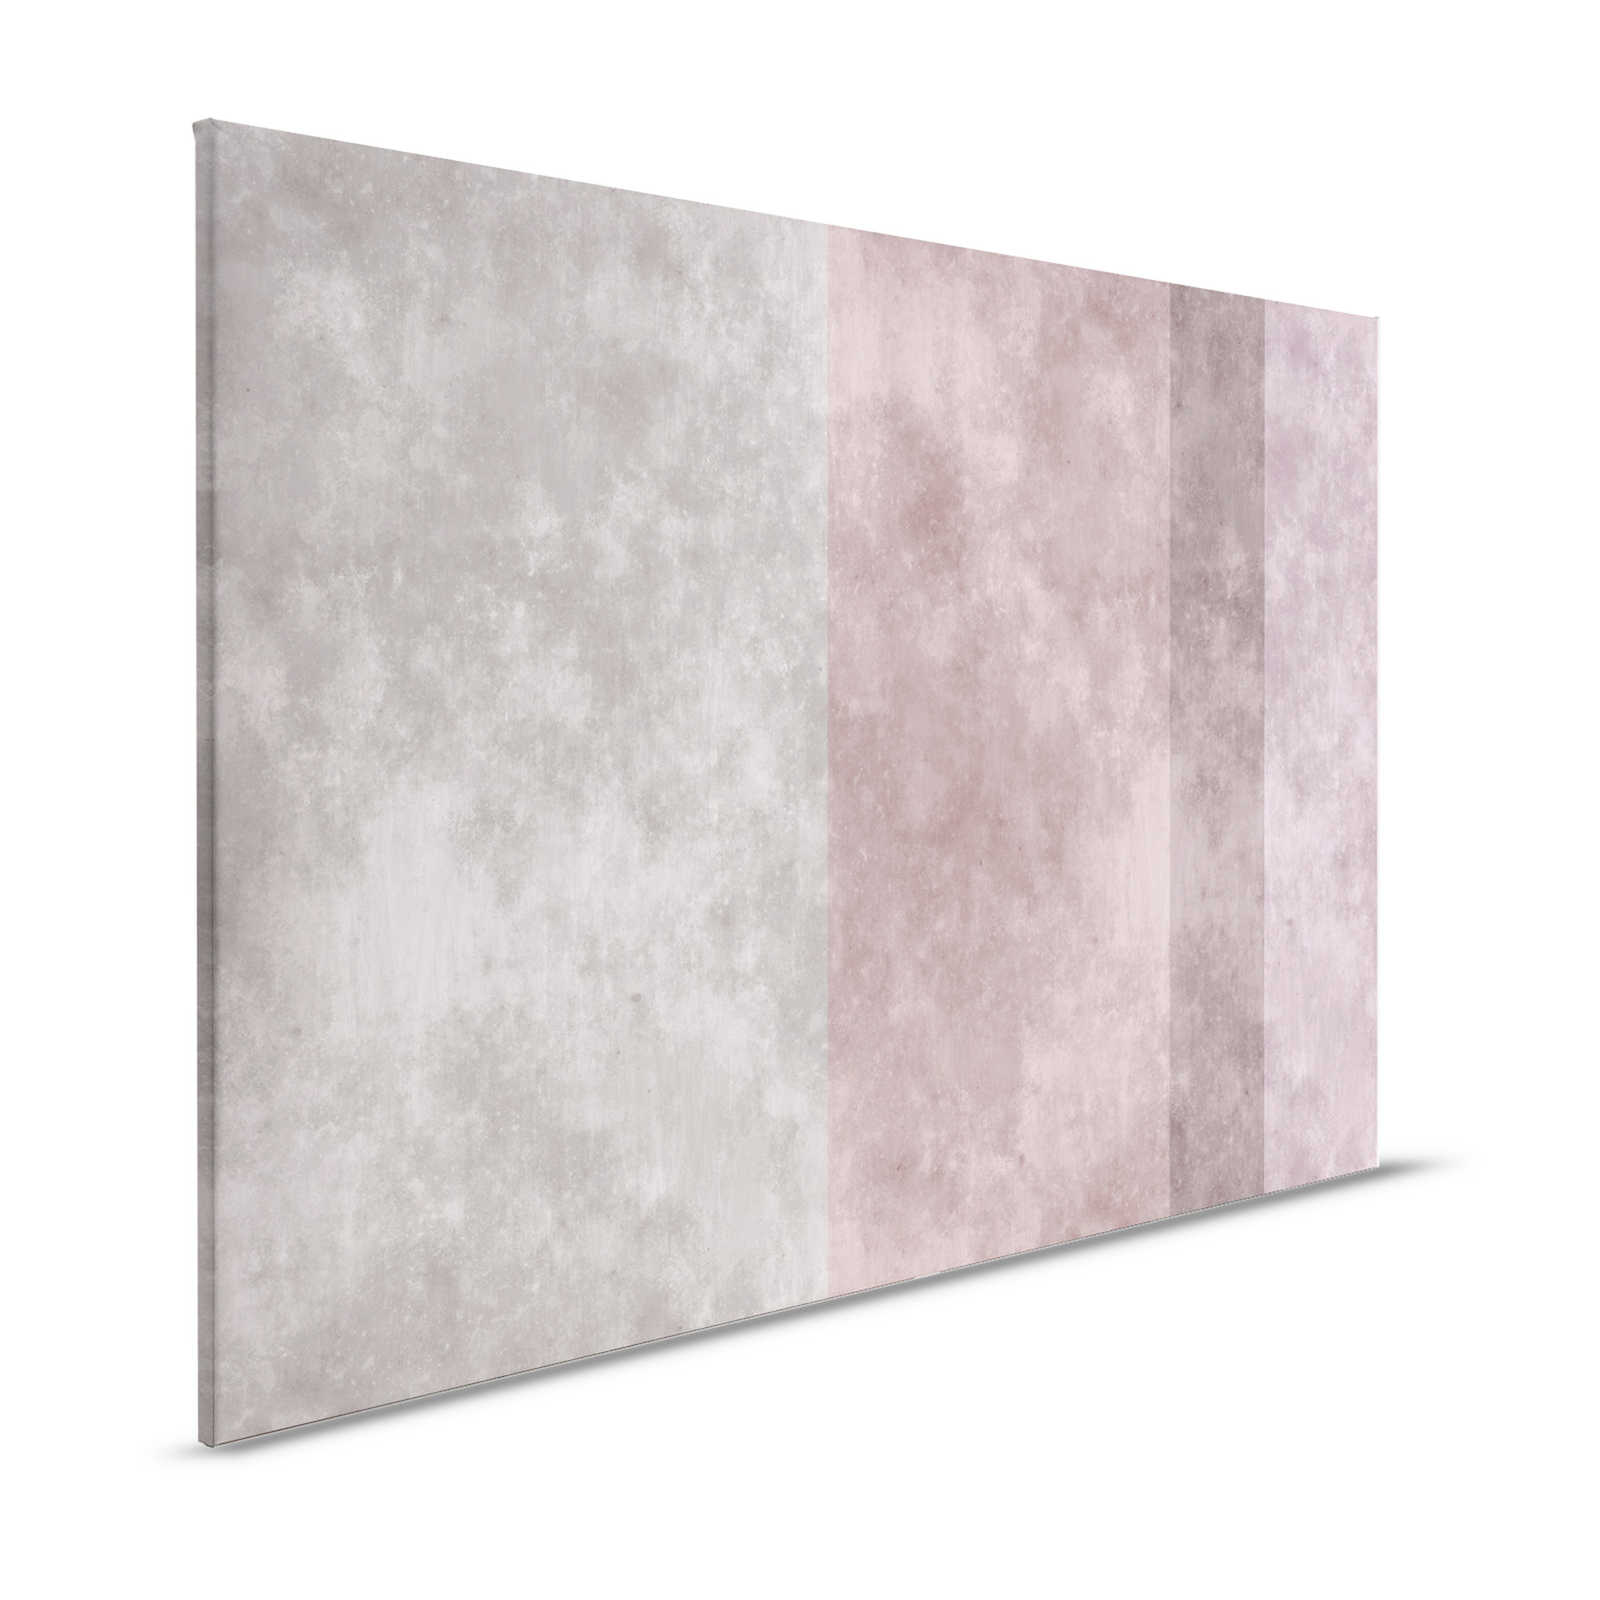 Betonoptik Leinwandbild mit Streifen | grau, rosa – 1,20 m x 0,80 m
